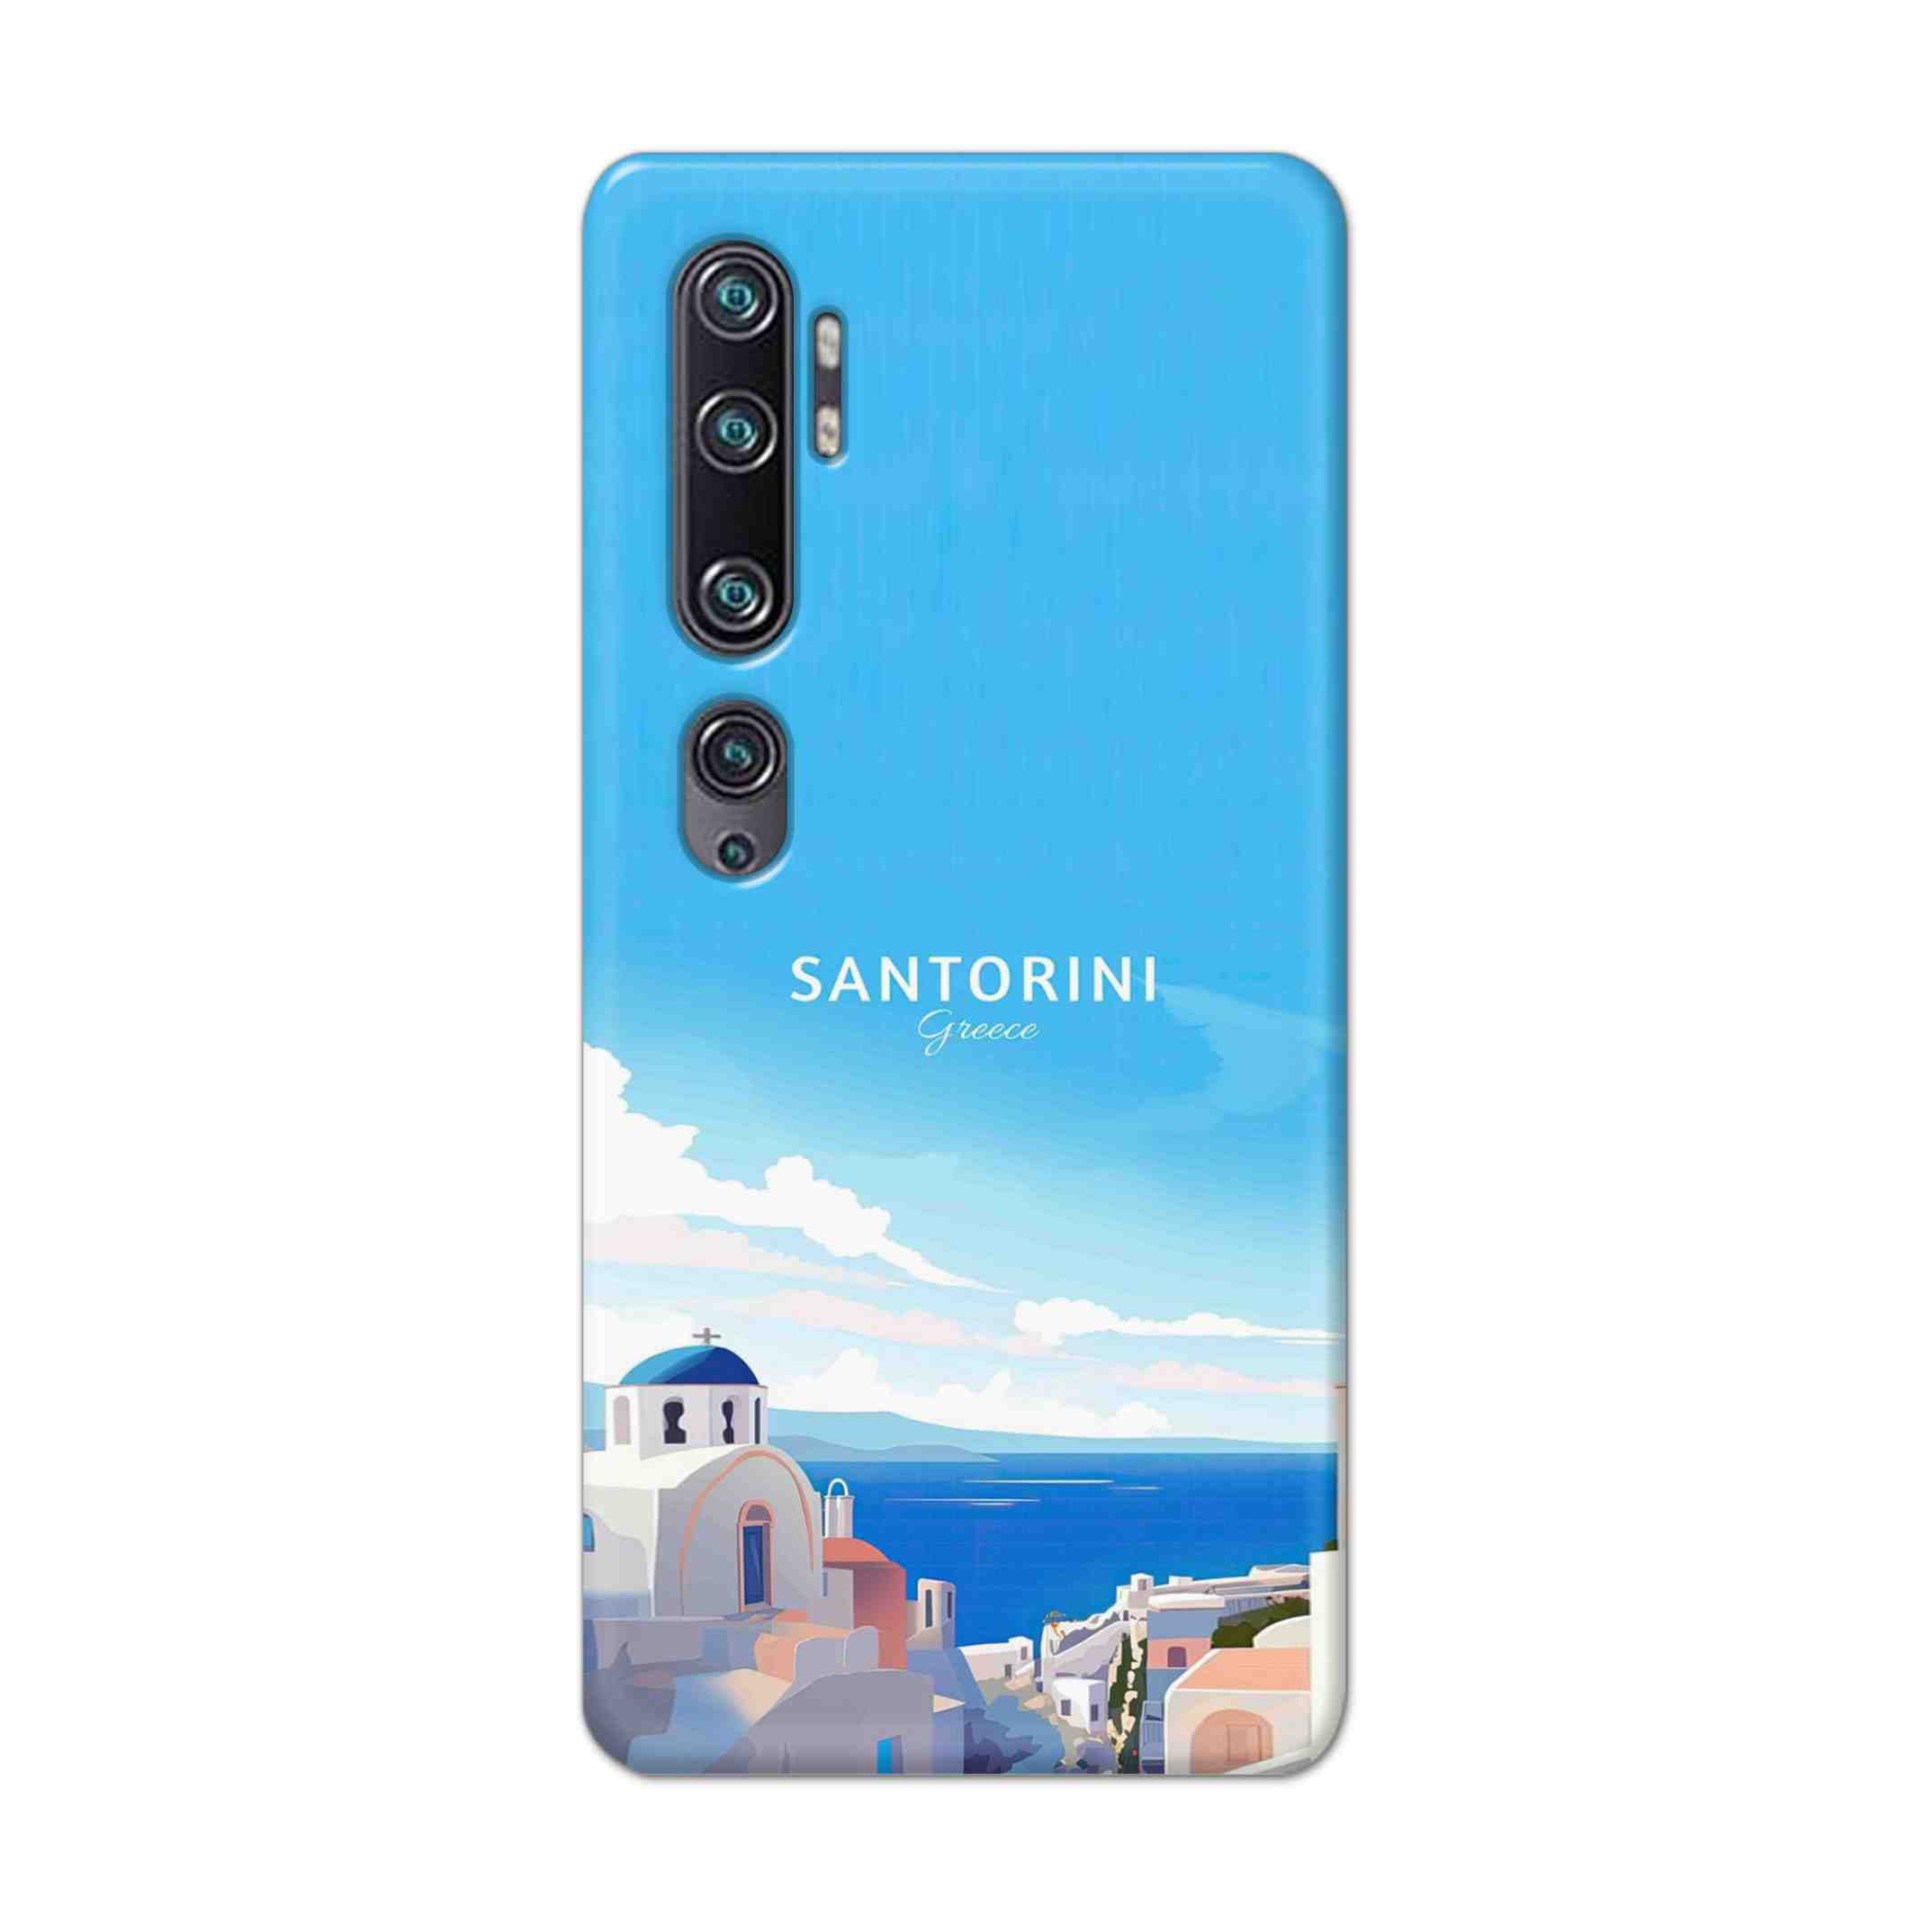 Buy Santorini Hard Back Mobile Phone Case Cover For Xiaomi Mi Note 10 Online